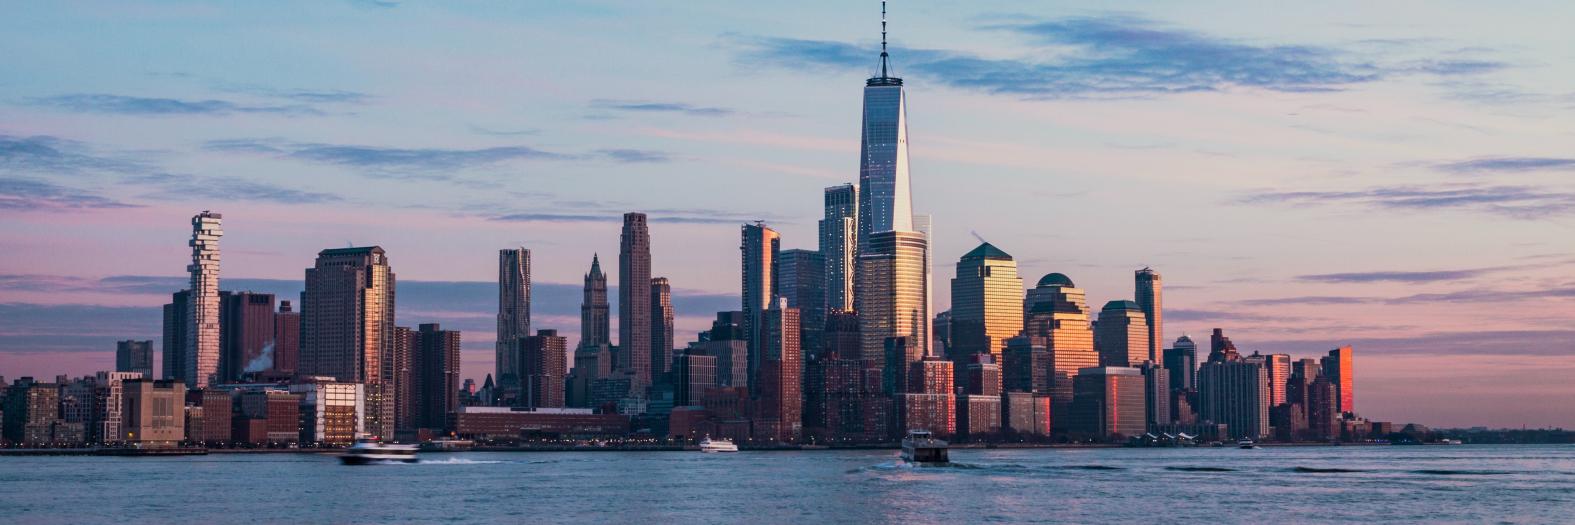 New York City skyline (Photo by Mike C. Valdivia on Unsplash)